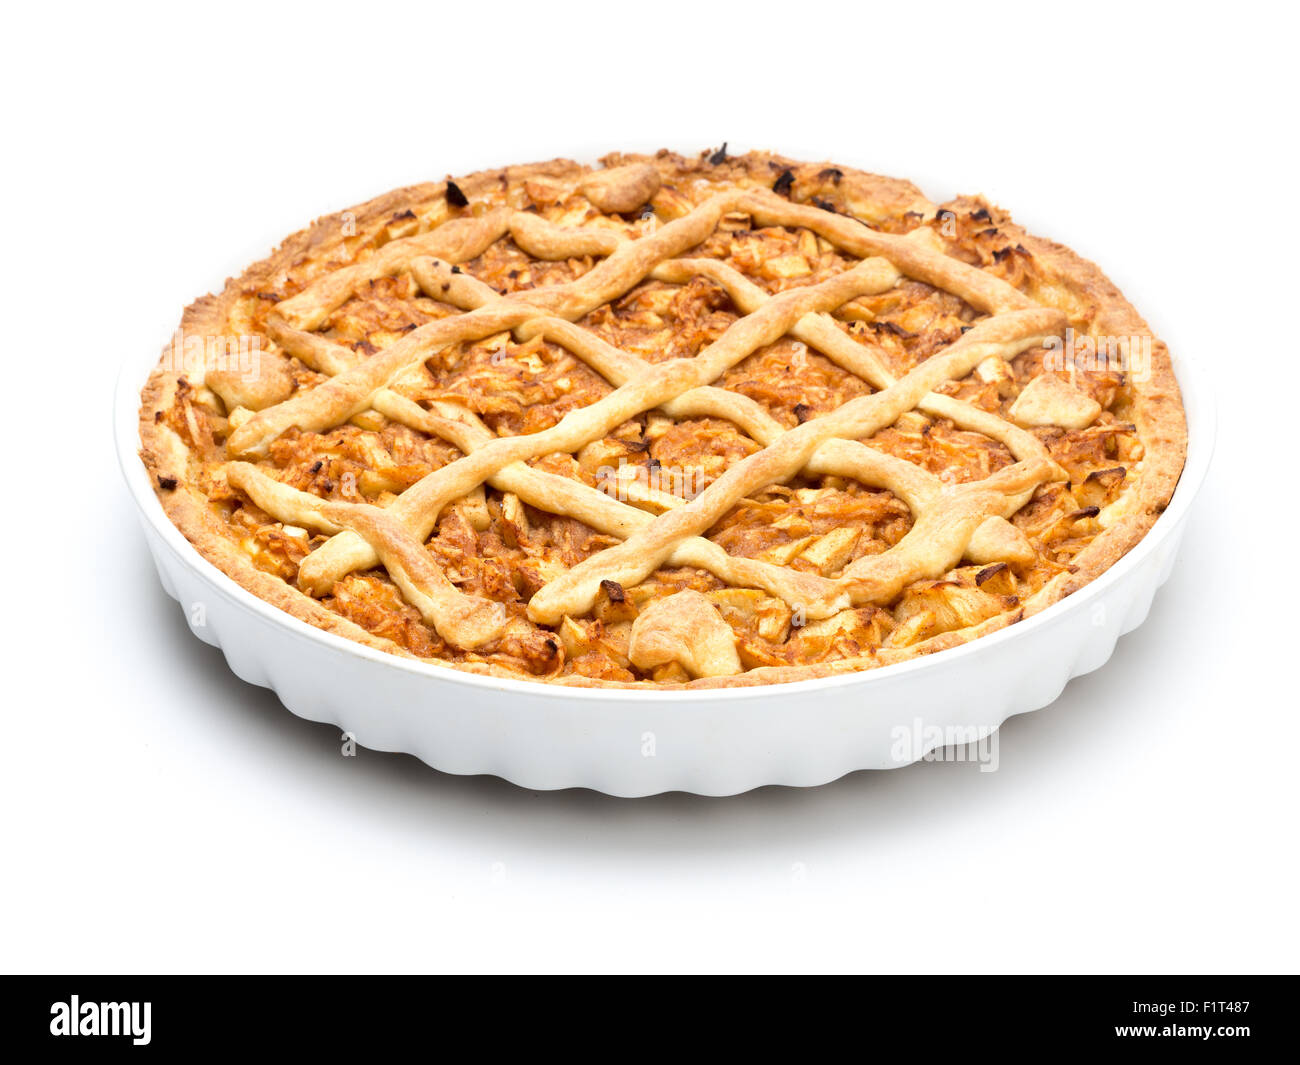 Apple pie in white ceramic pan on white background Stock Photo